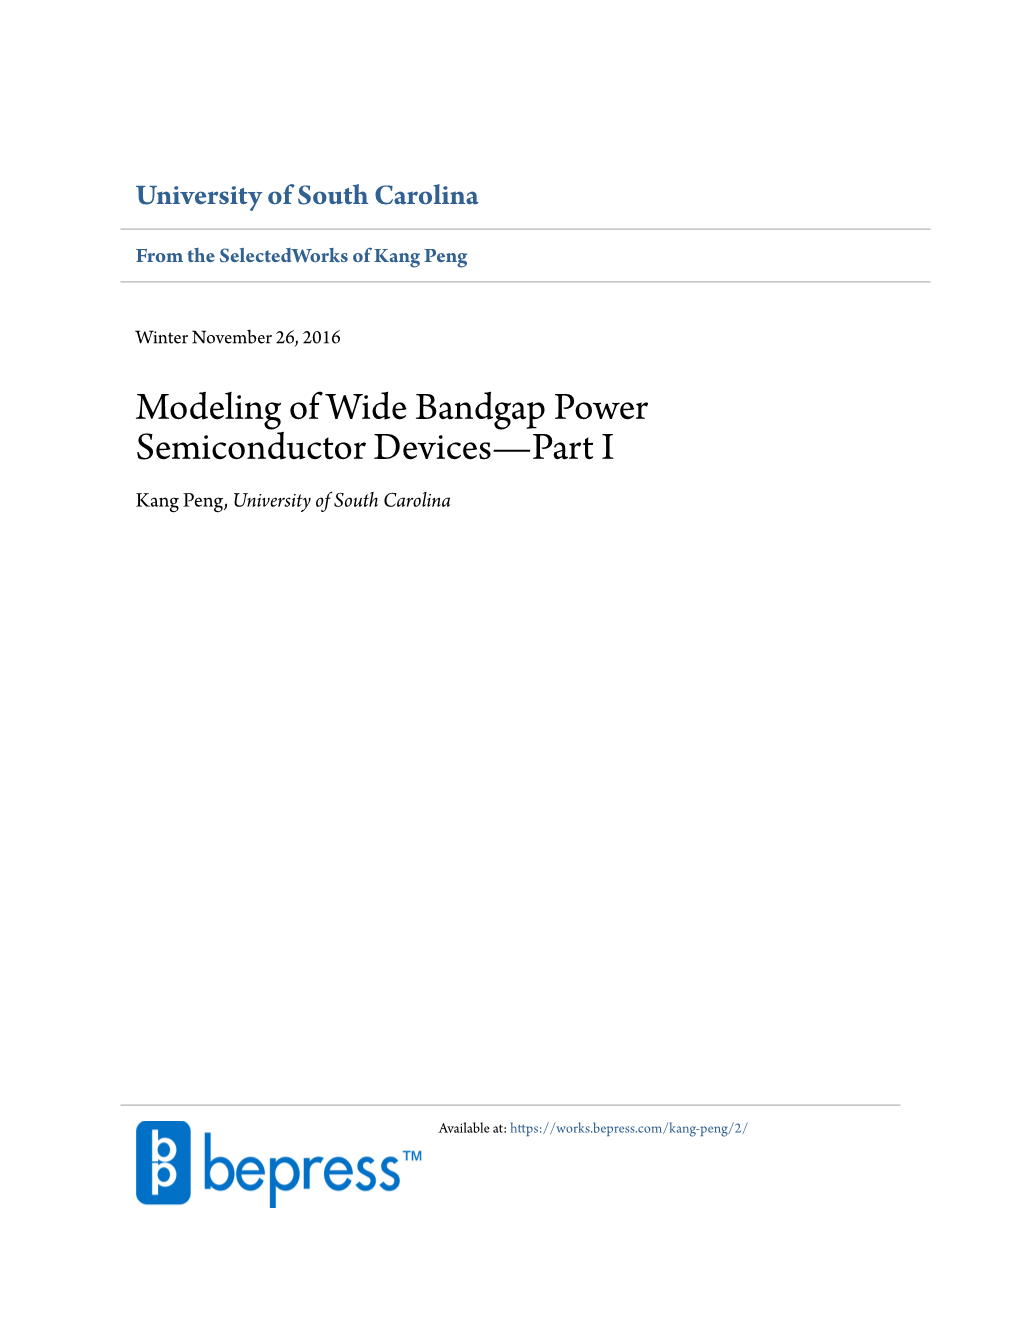 Modeling of Wide Bandgap Power Semiconductor Devices—Part I Kang Peng, University of South Carolina